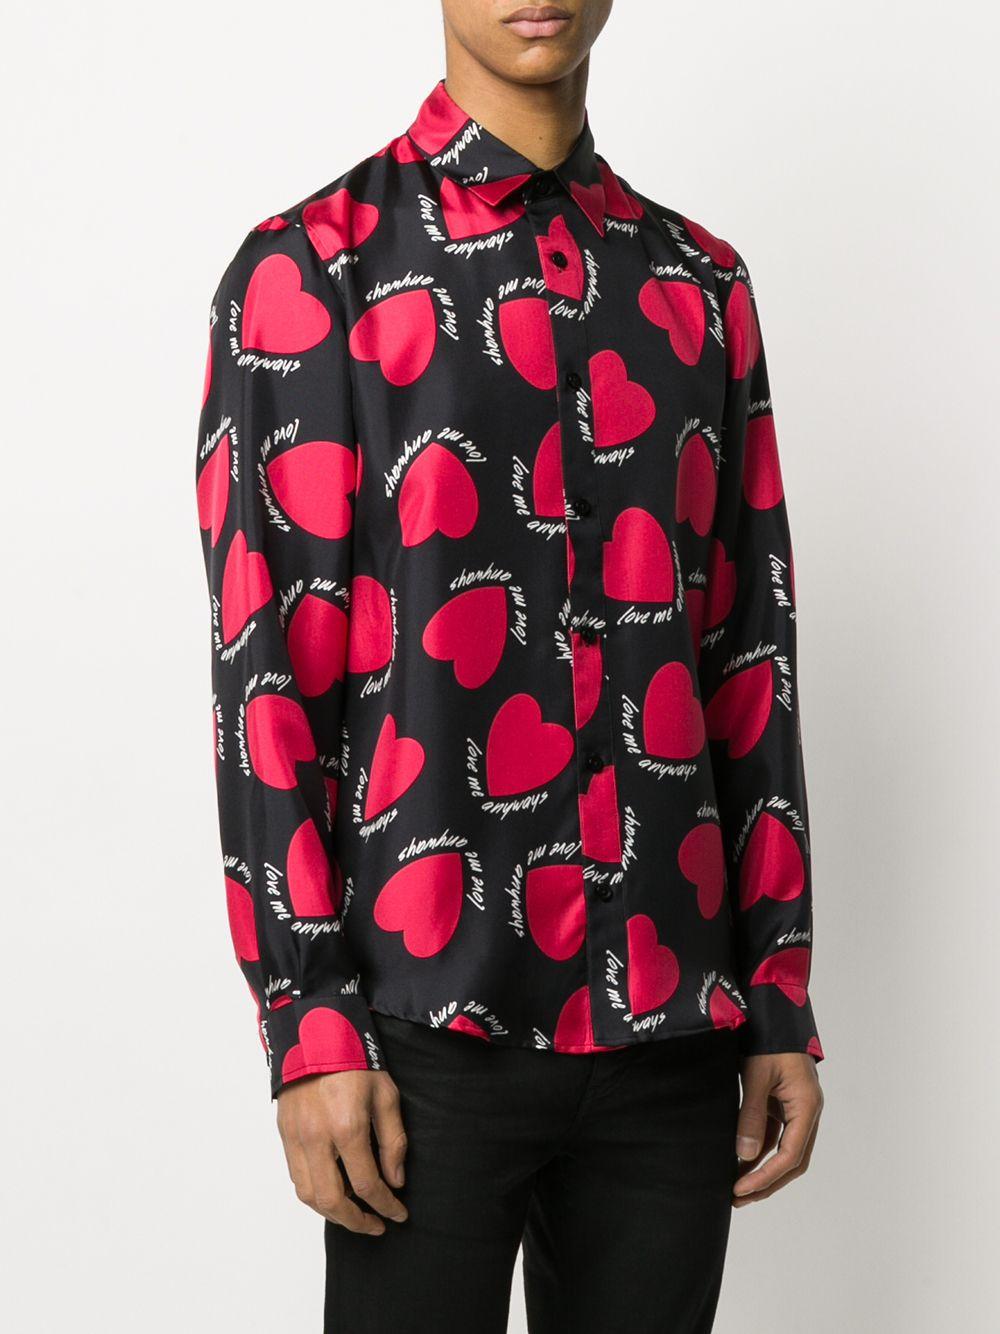 Amiri Silk Long Sleeve Heart Print Shirt in Red for Men - Save 7% - Lyst